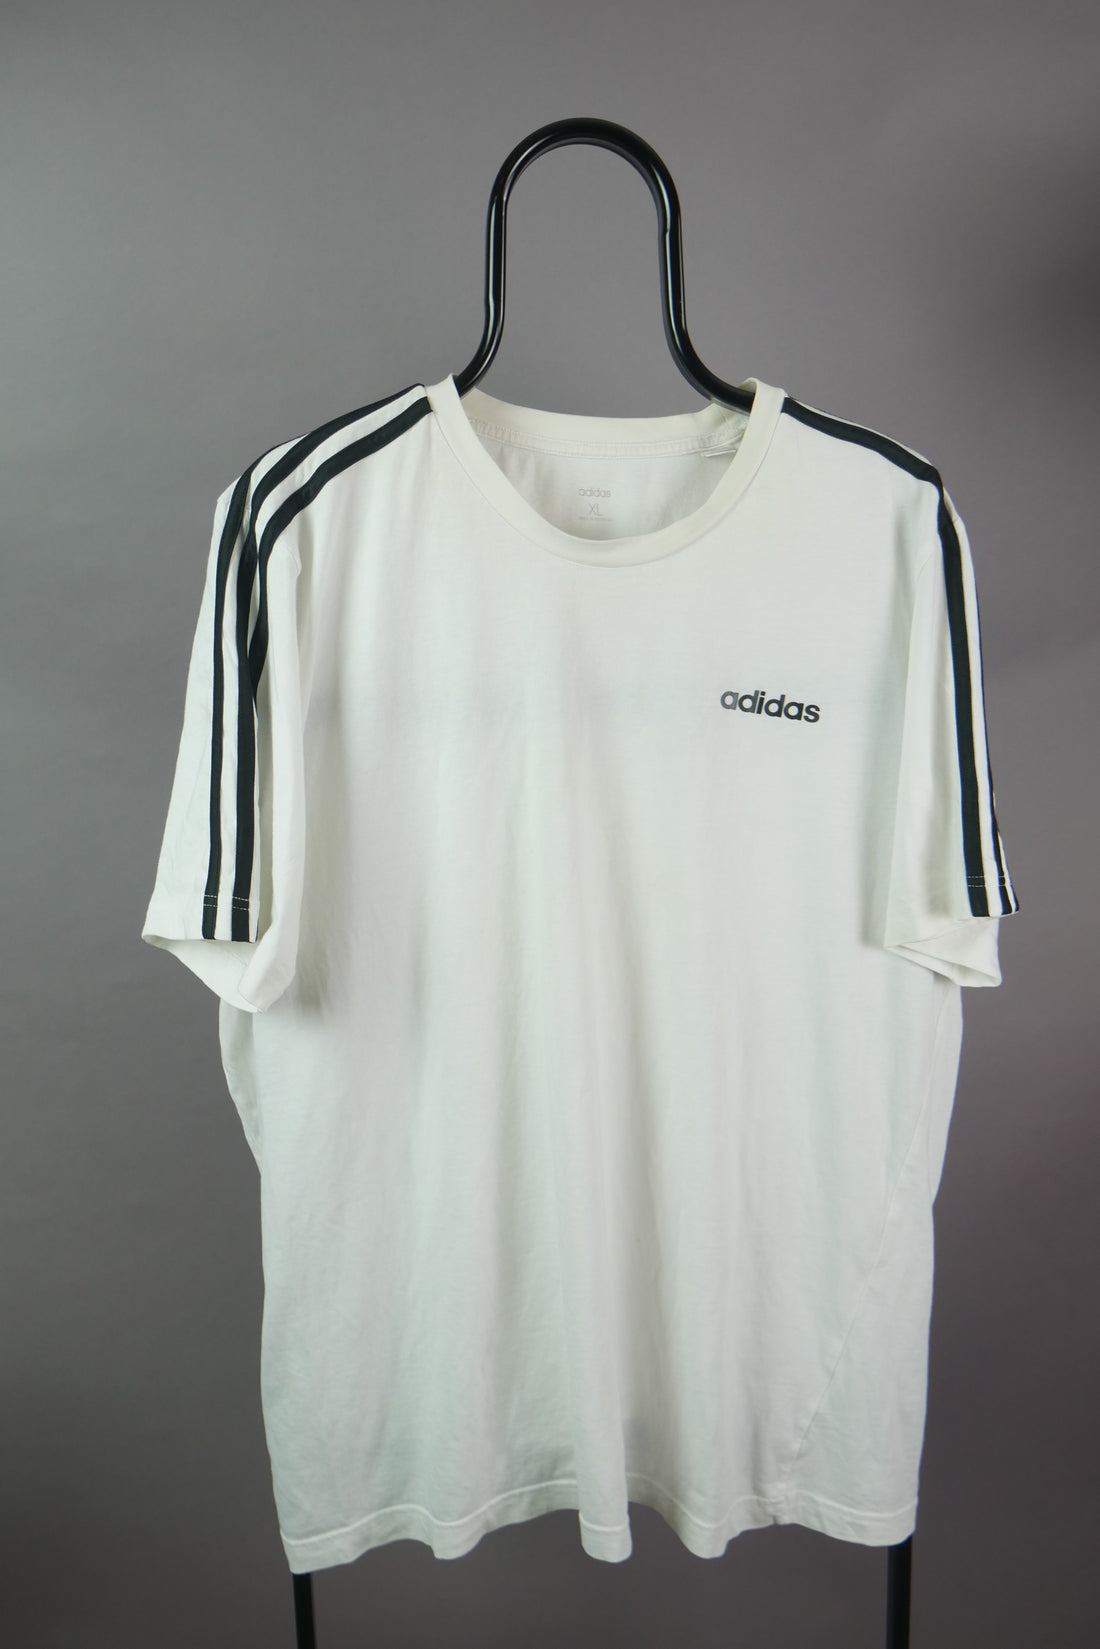 The Adidas Graphic Logo T-Shirt (XL)